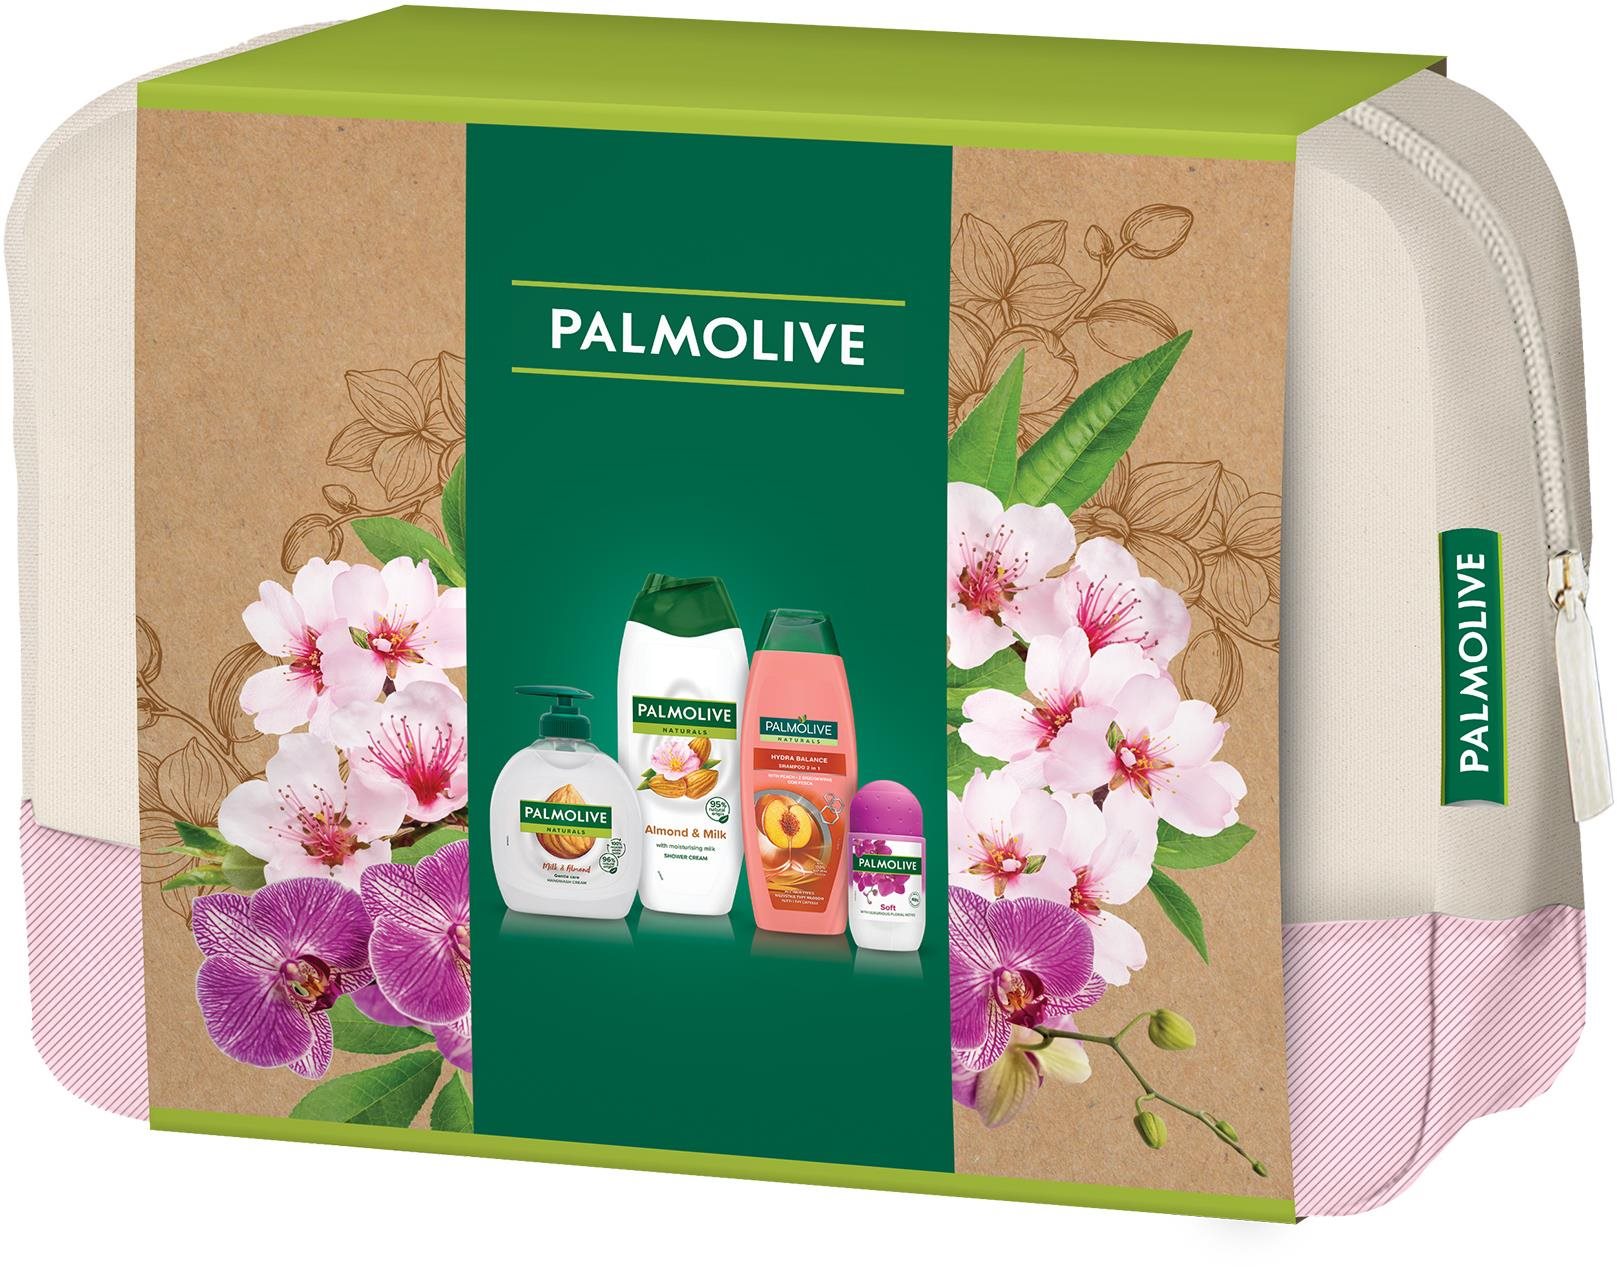 PALMOLIVE Naturals Almond bag